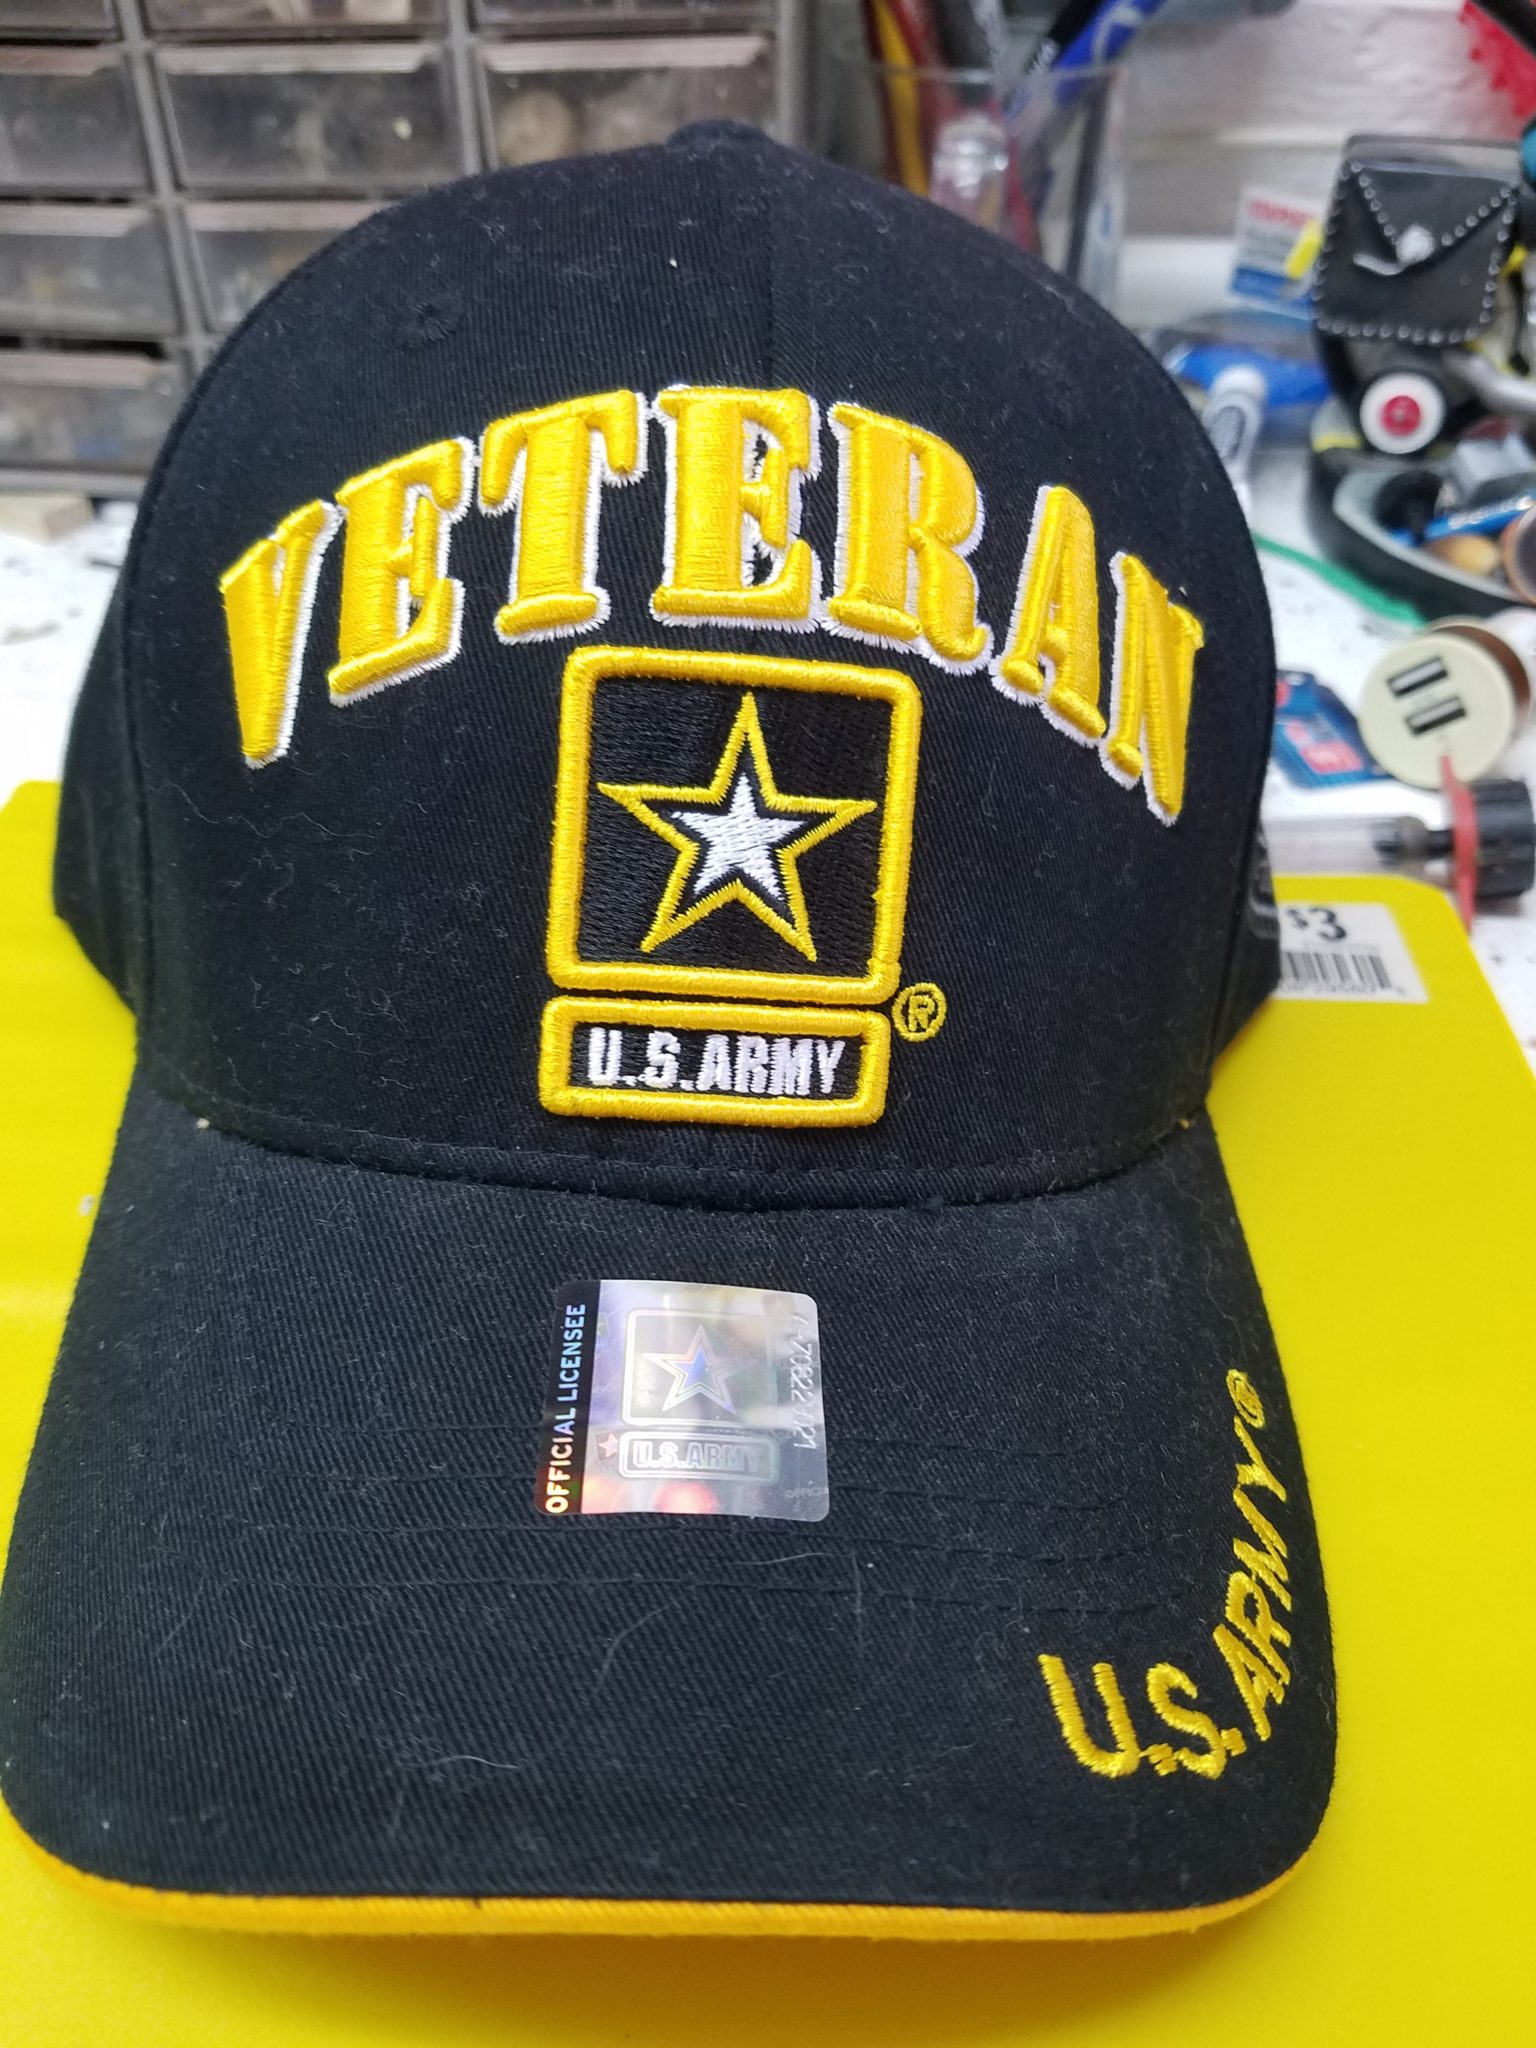 US Army Veteran Ball Cap with full brim